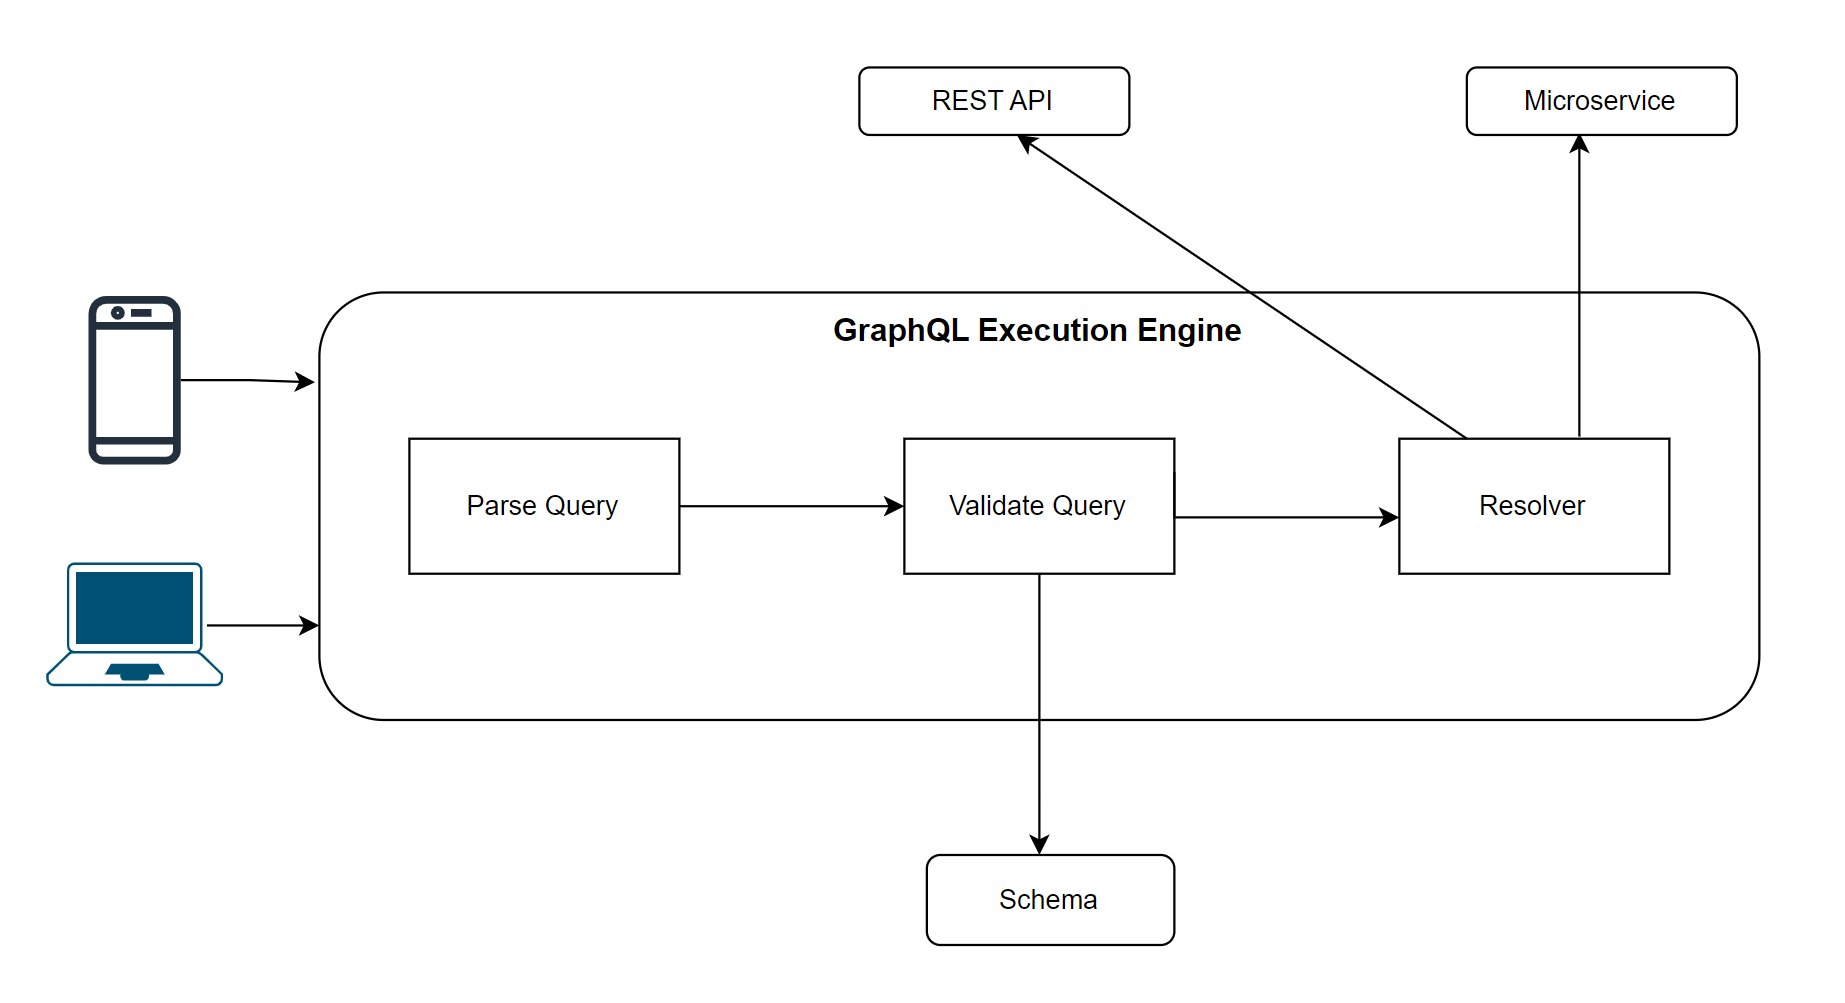 Figure 2: The GraphQL execution engine